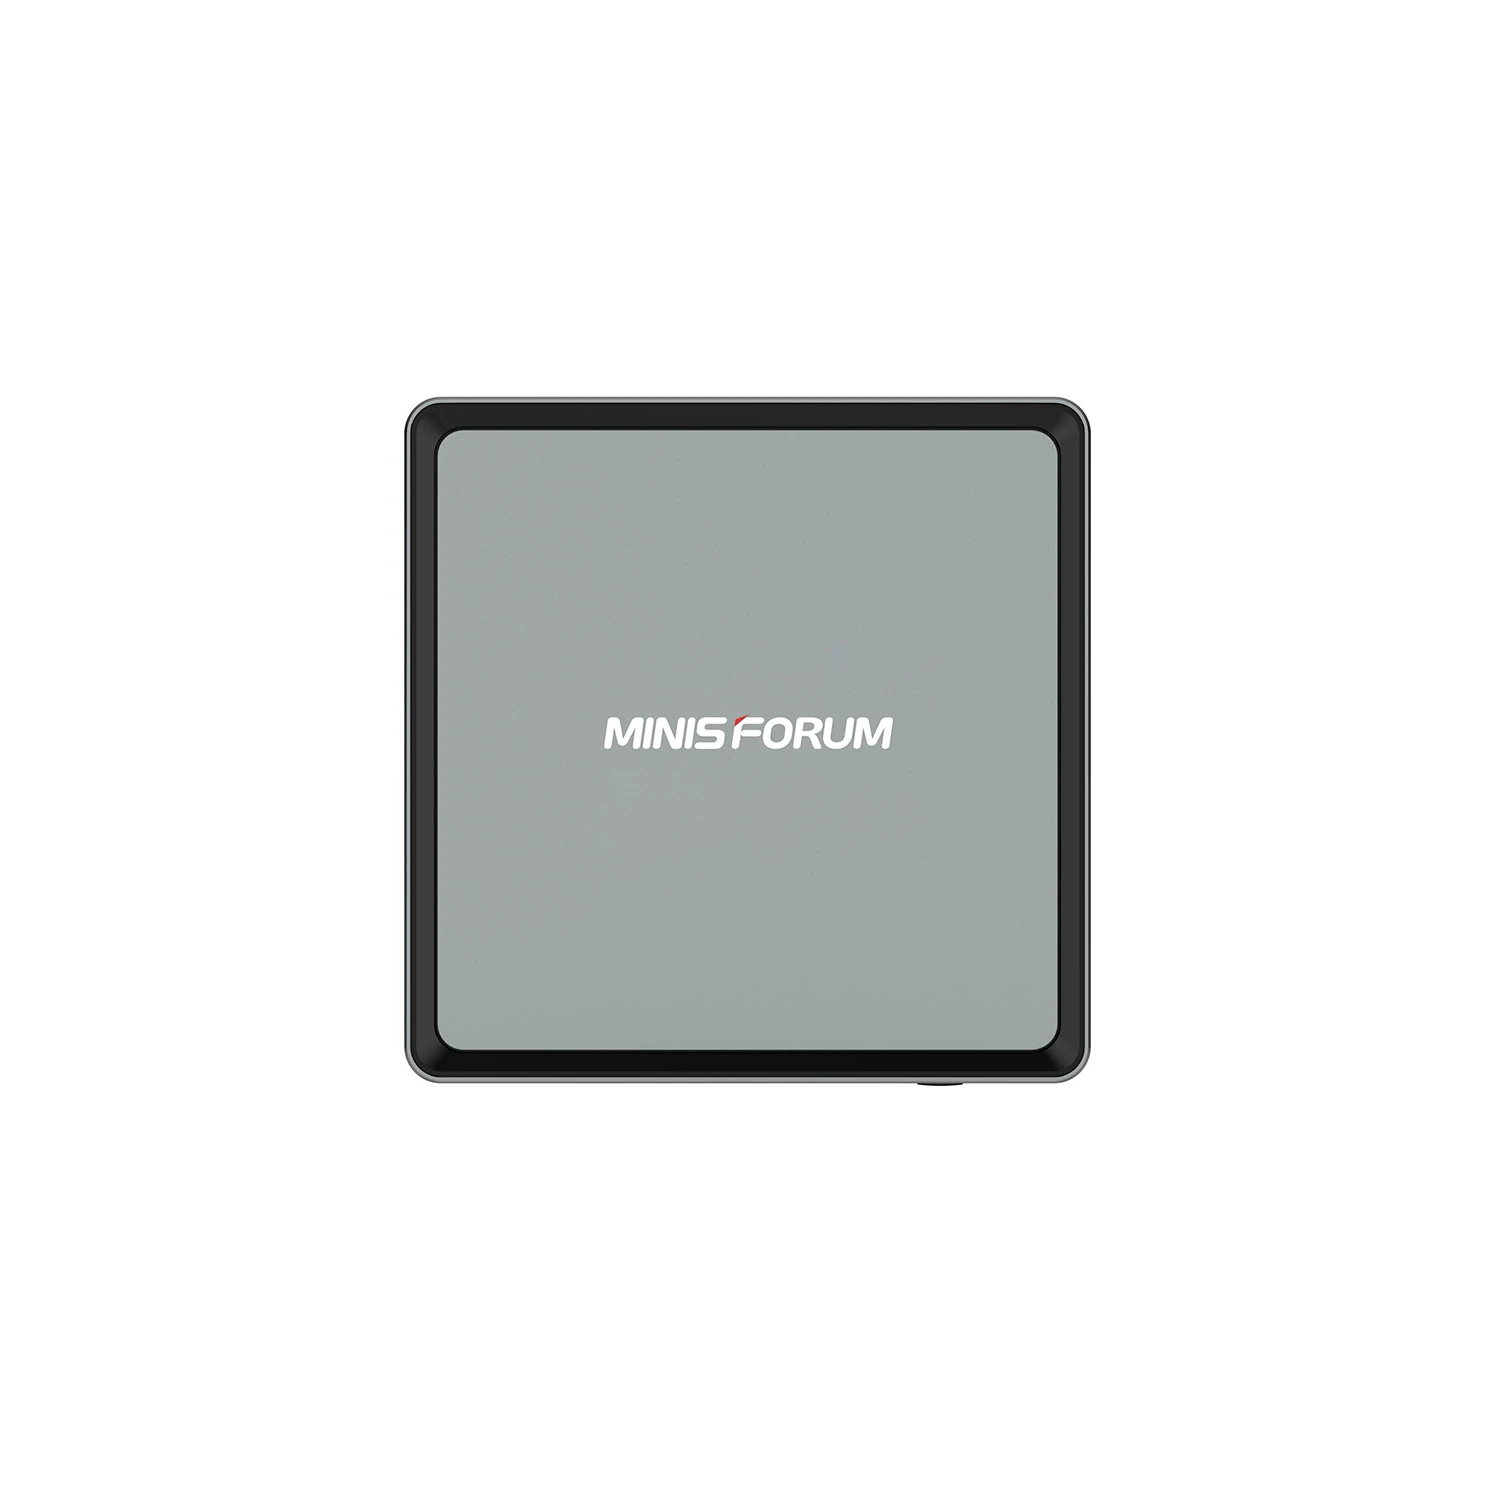 Find Minisforum UM250 Mini PC 8GB DDR4 128GB SSD AMD Ryzen Embedded V1605B Processor Quad Core Windows 10 Pro Dual Band Wi Fi Bluetooth Support 4K Output for Sale on Gipsybee.com